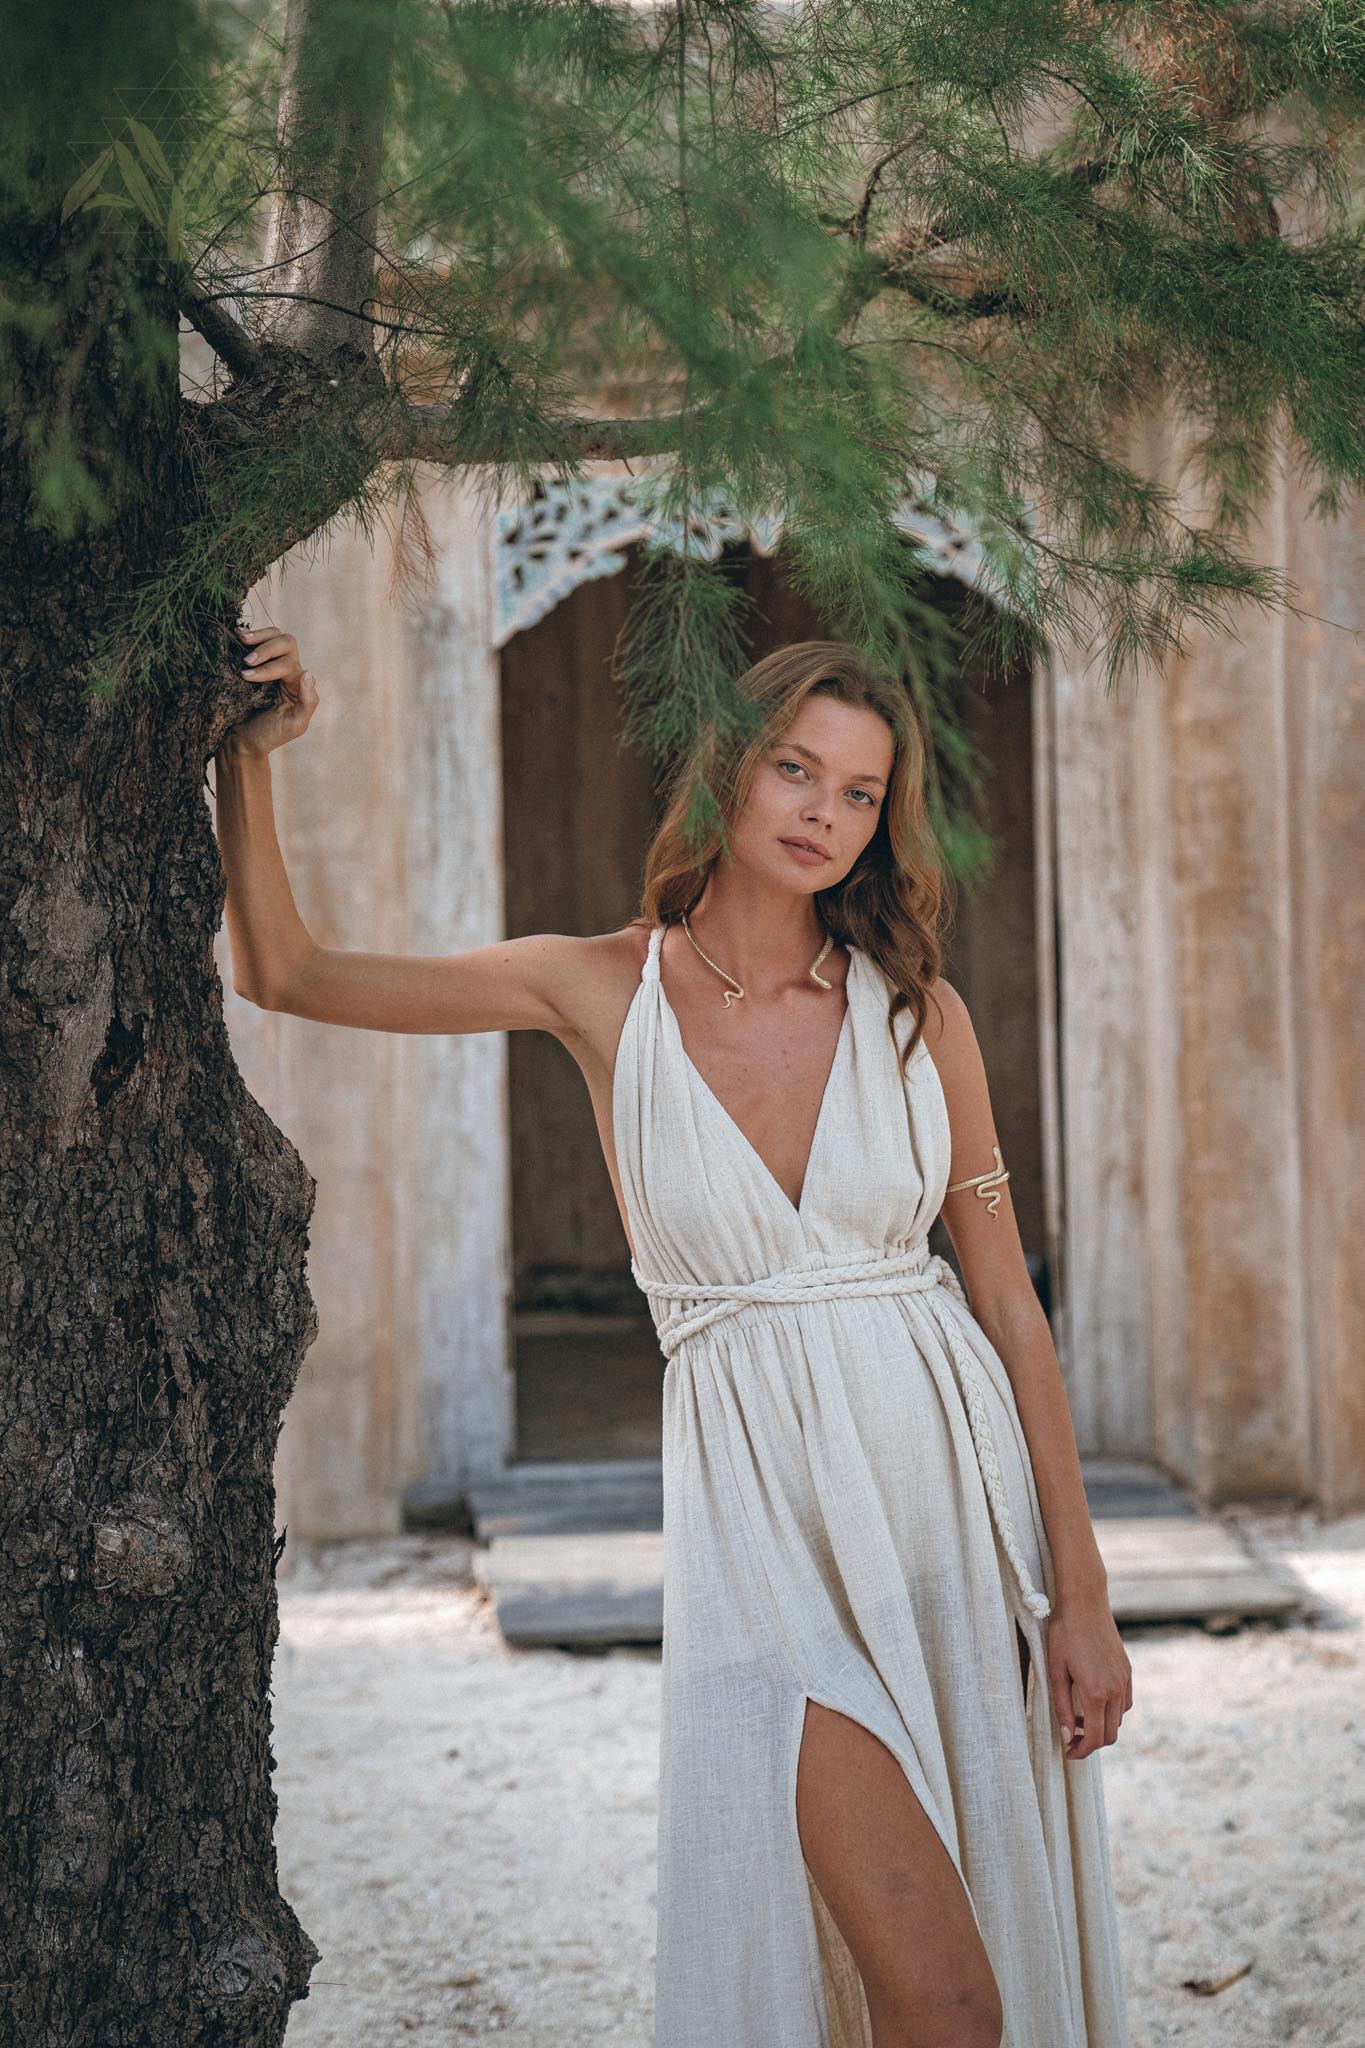 greek style dress